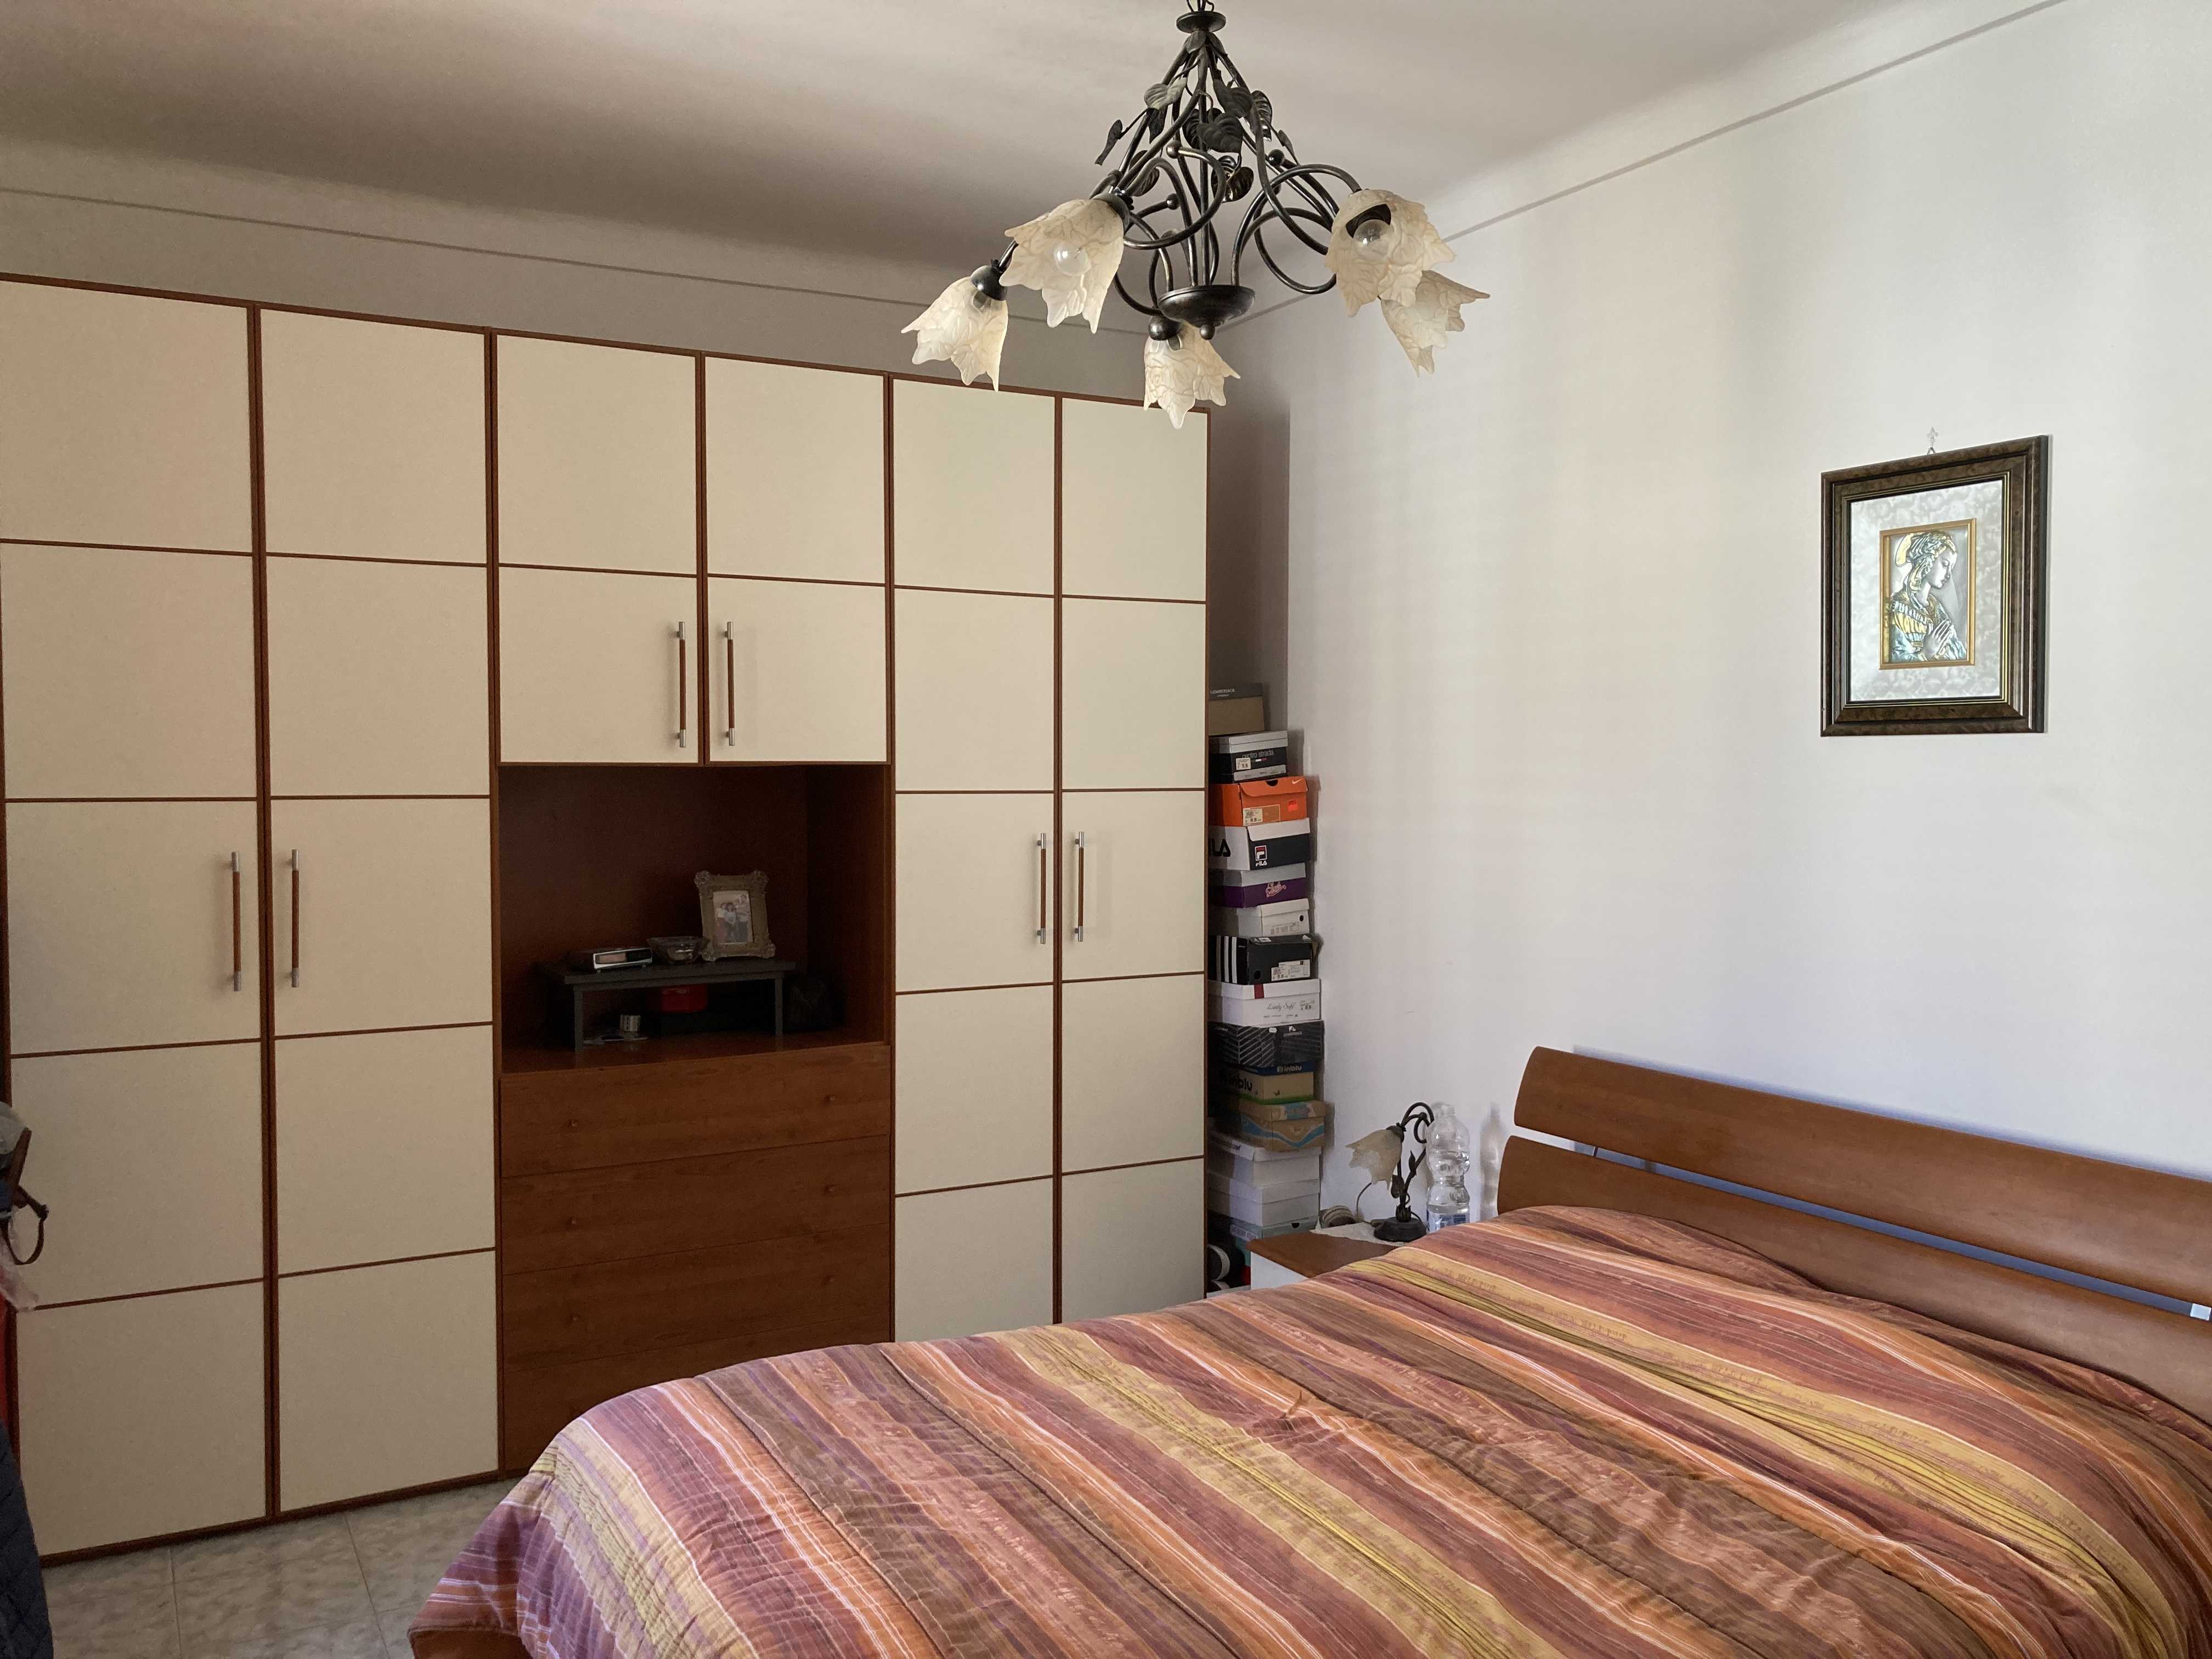 Vendite Salento: Vendita appartamento (Alessano) - camera